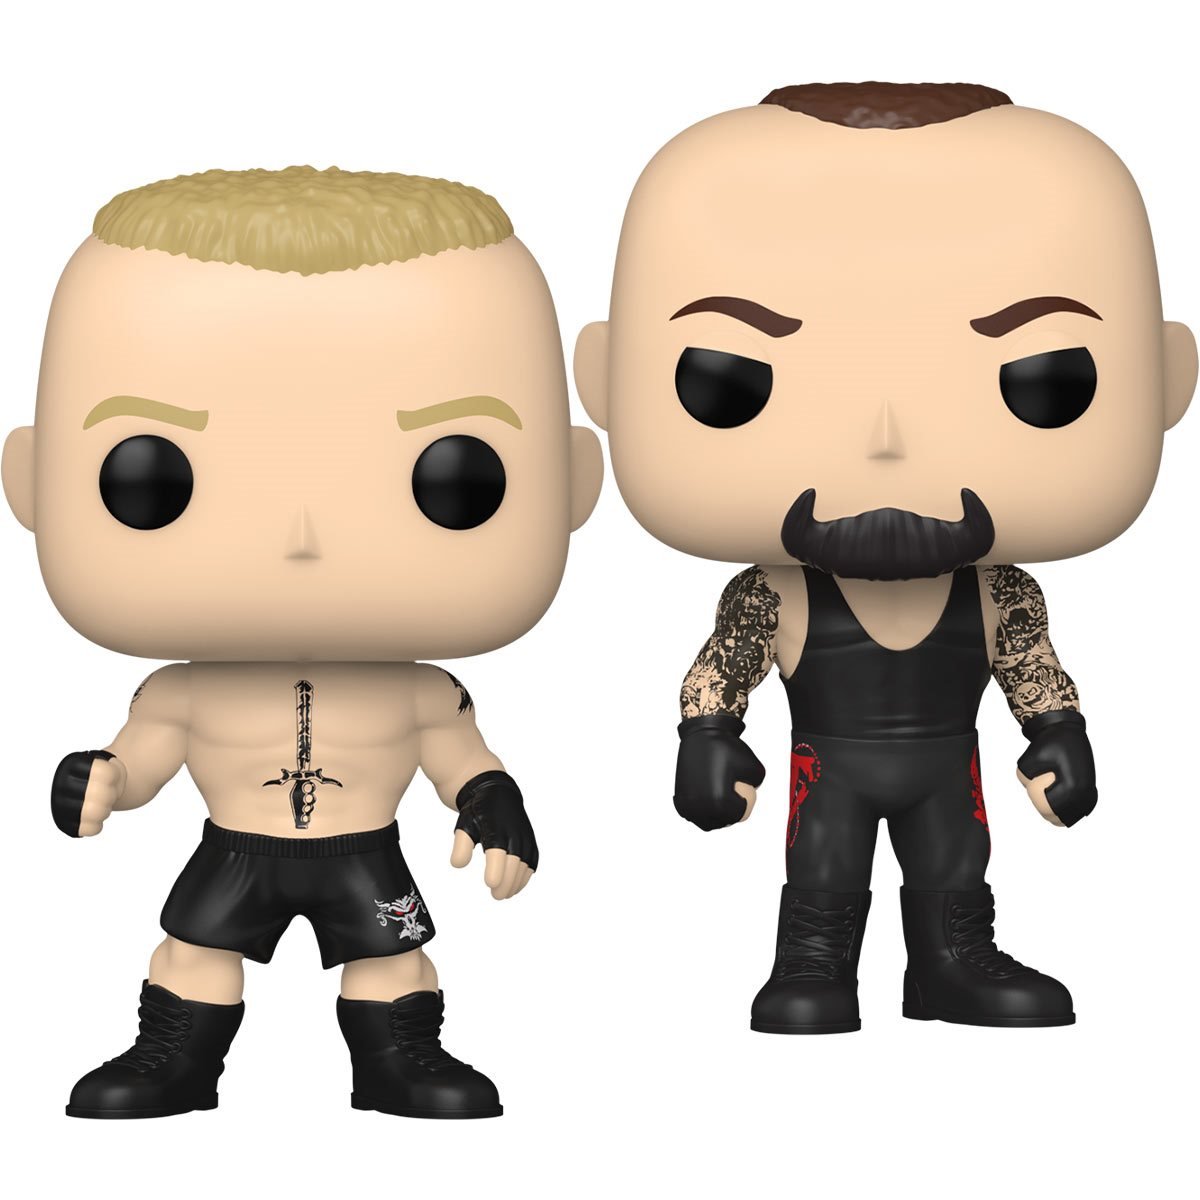 WWE Brock Lesnar and Undertaker Funko Pop! Figure 2-Pack